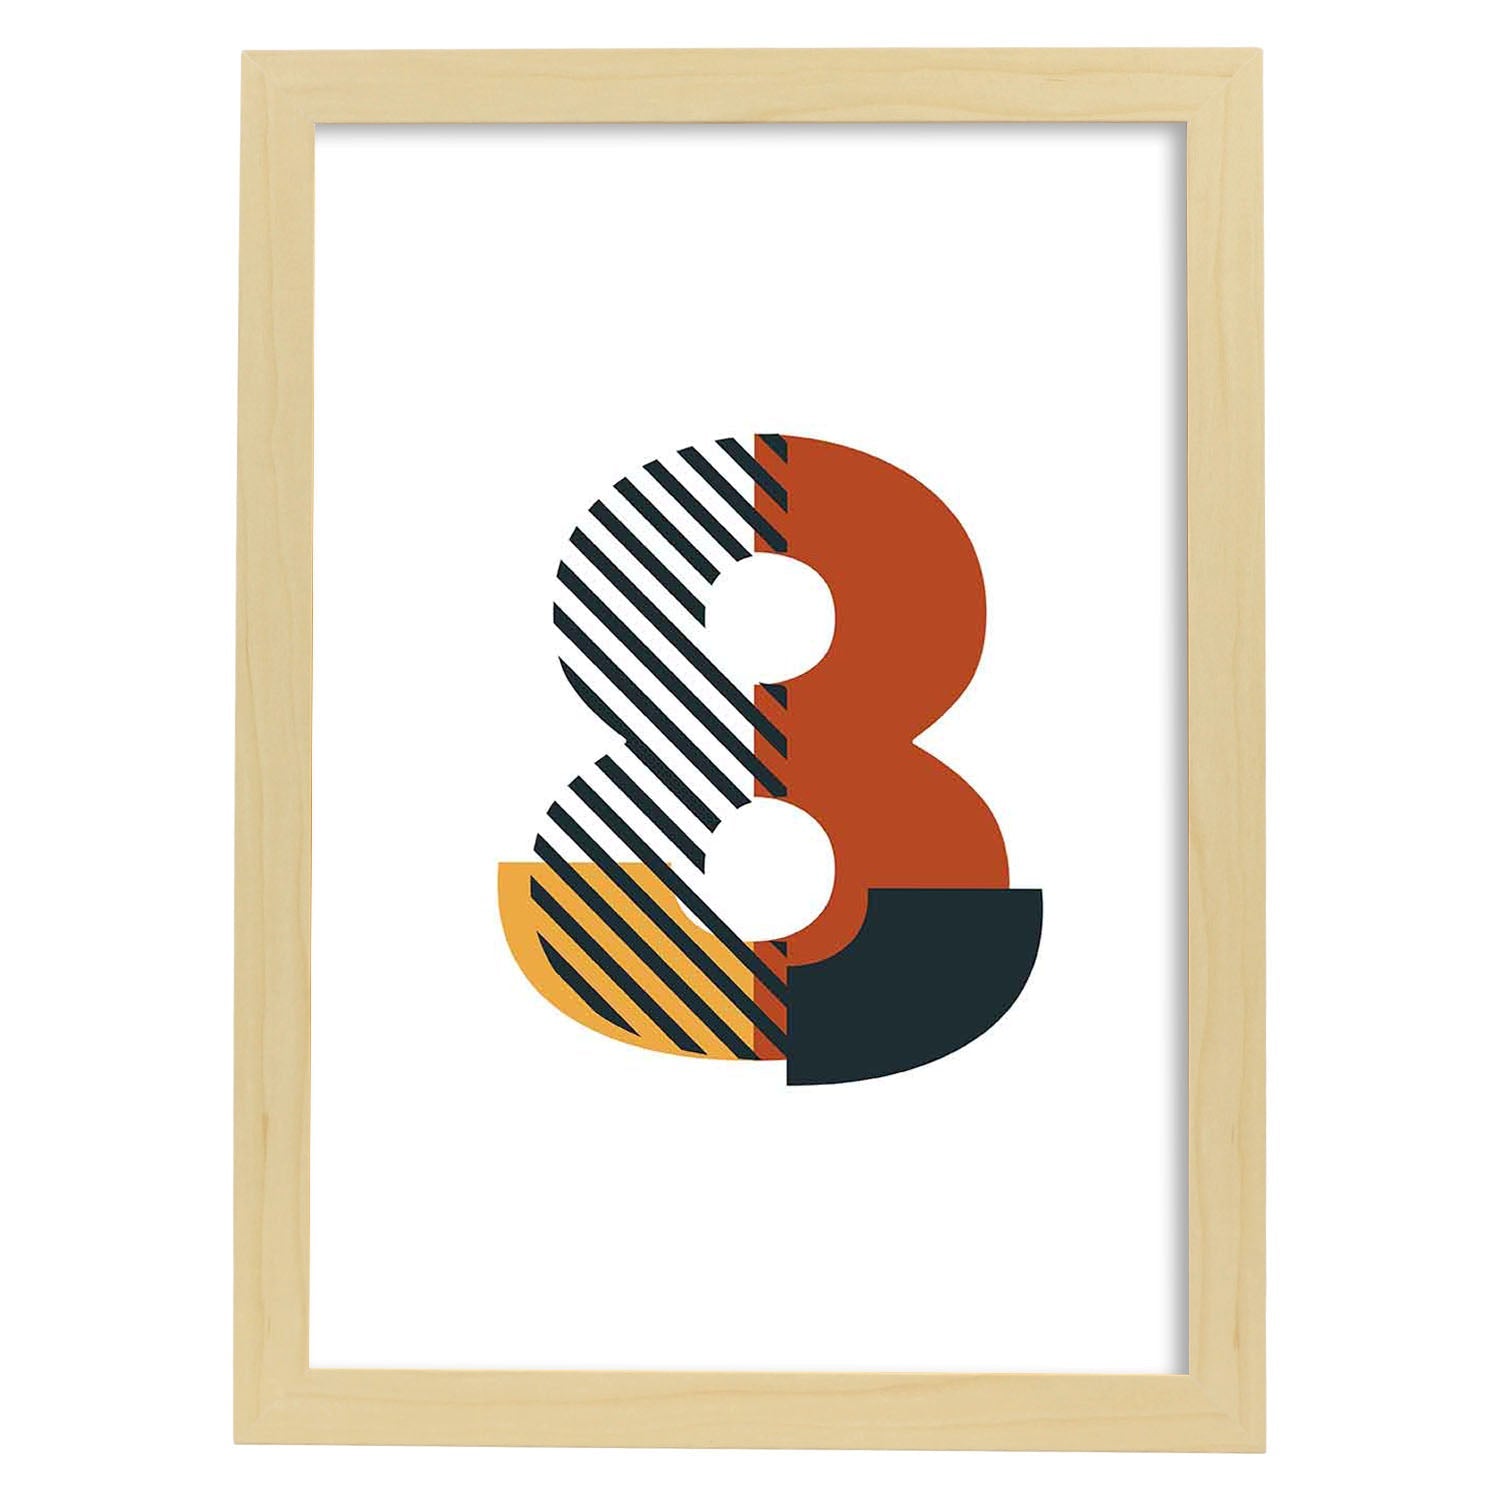 Poster de número 8. Lámina estilo Geometria con imágenes del alfabeto.-Artwork-Nacnic-A3-Marco Madera clara-Nacnic Estudio SL